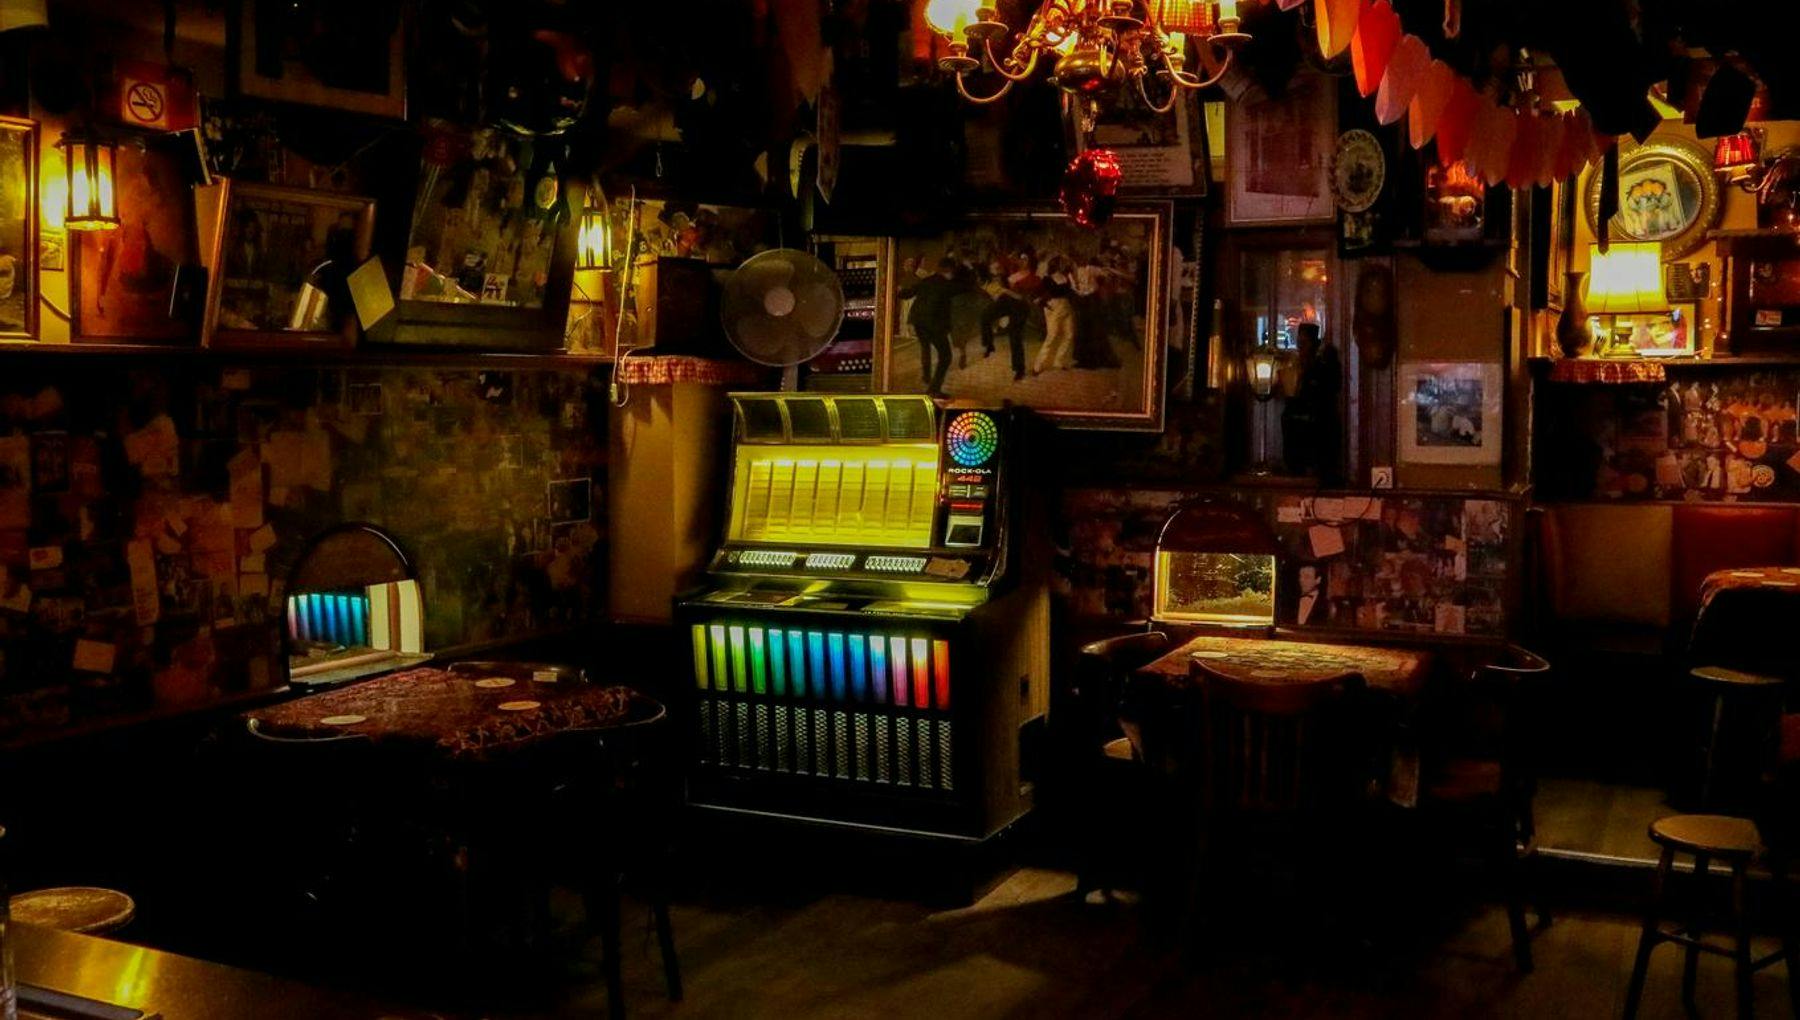 Café 't Mandje, bar at Zeedijk, interior with jukebox and decorations